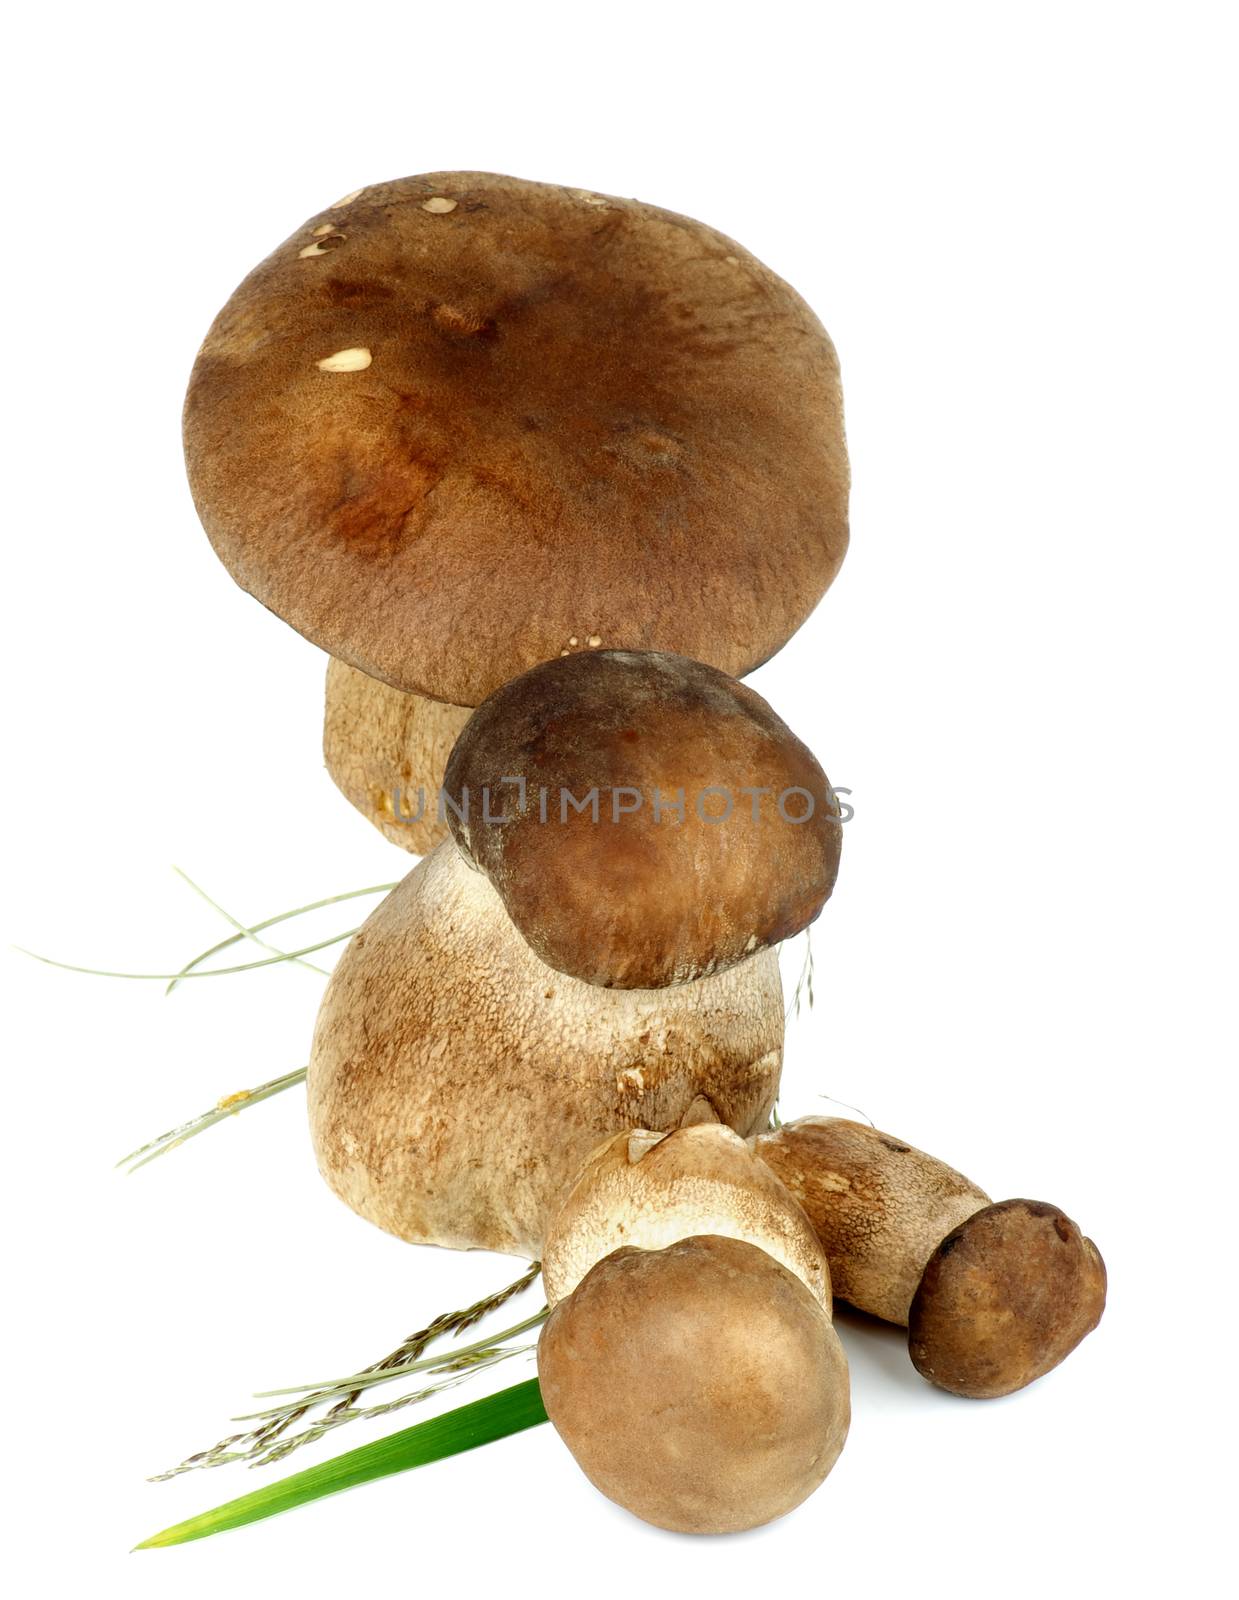 Boletus Mushrooms by zhekos